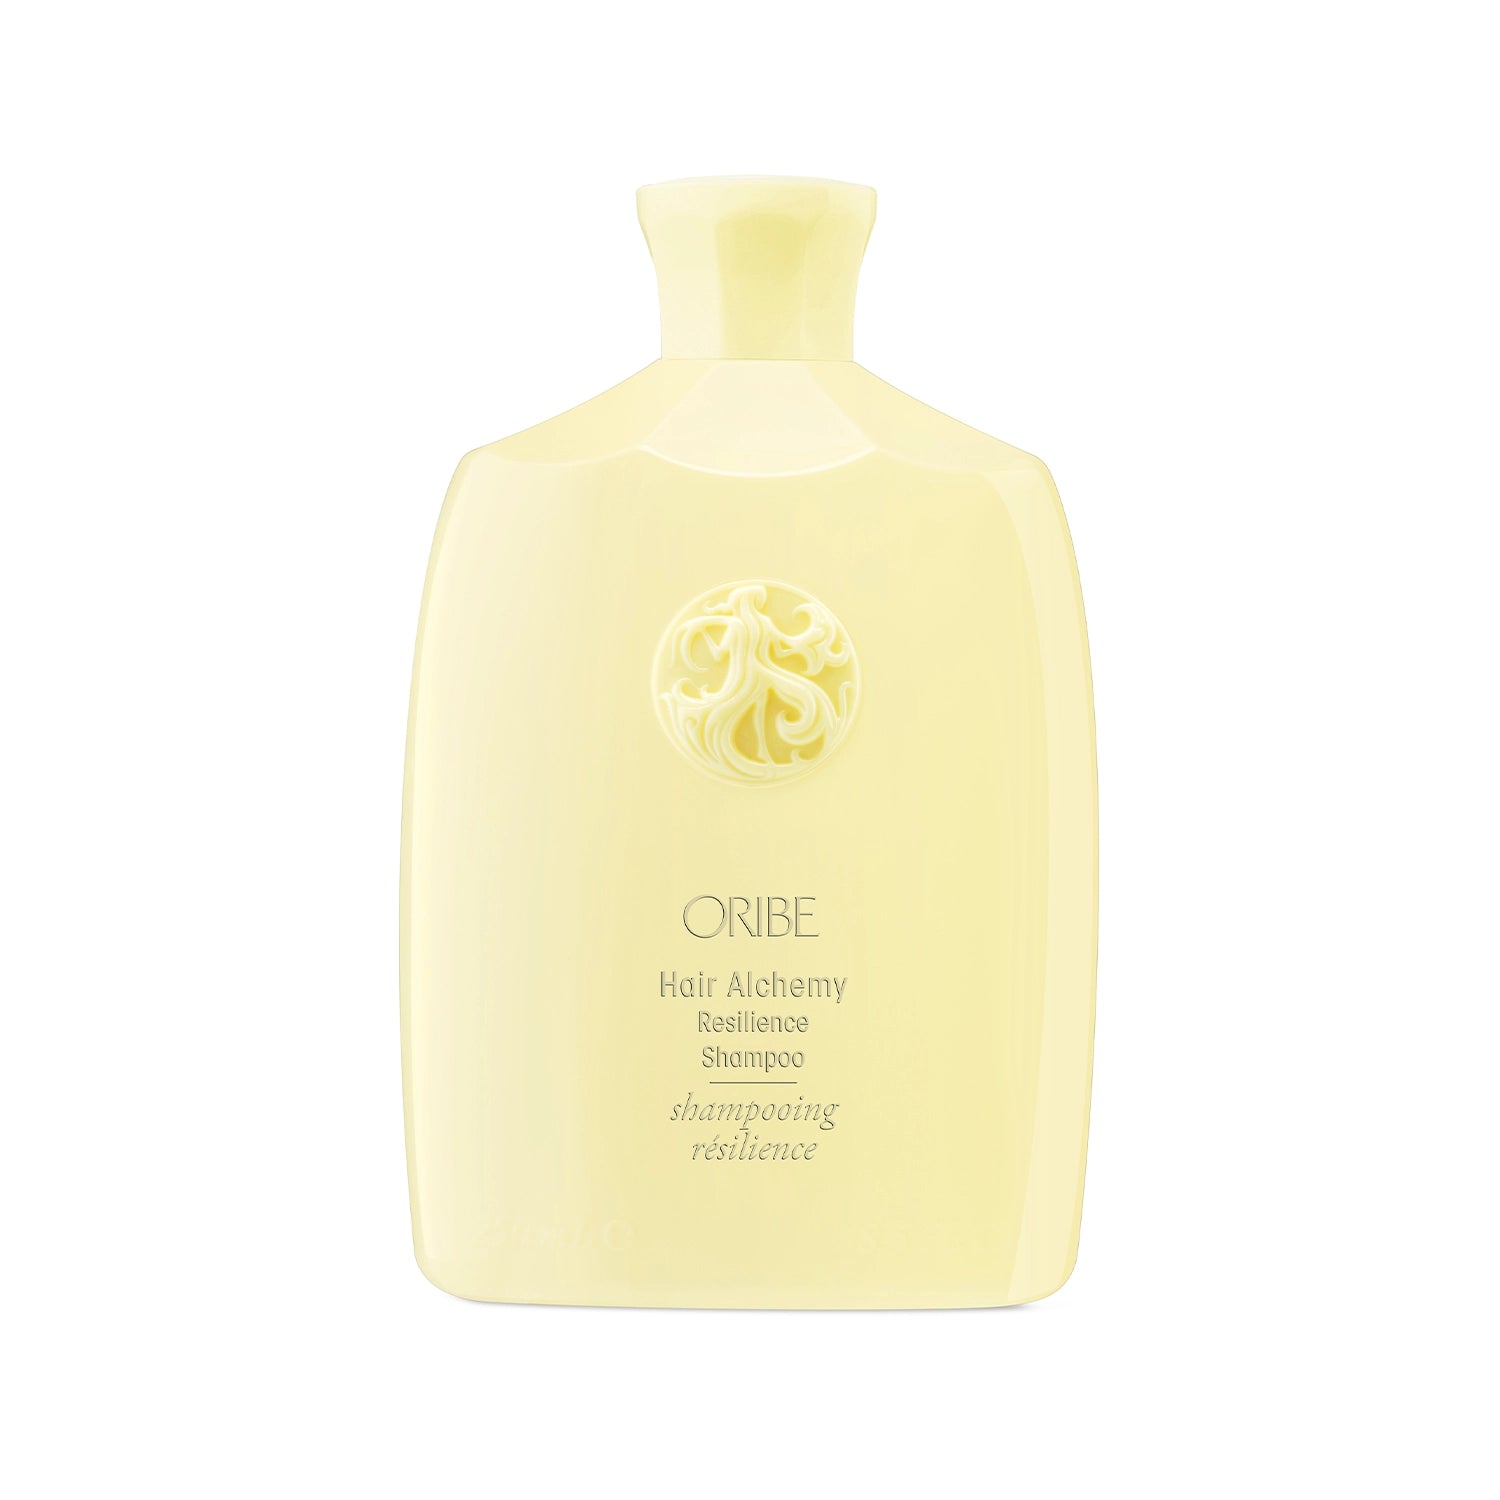 ORIBE - Hair Alchemy Resilience Shampoo